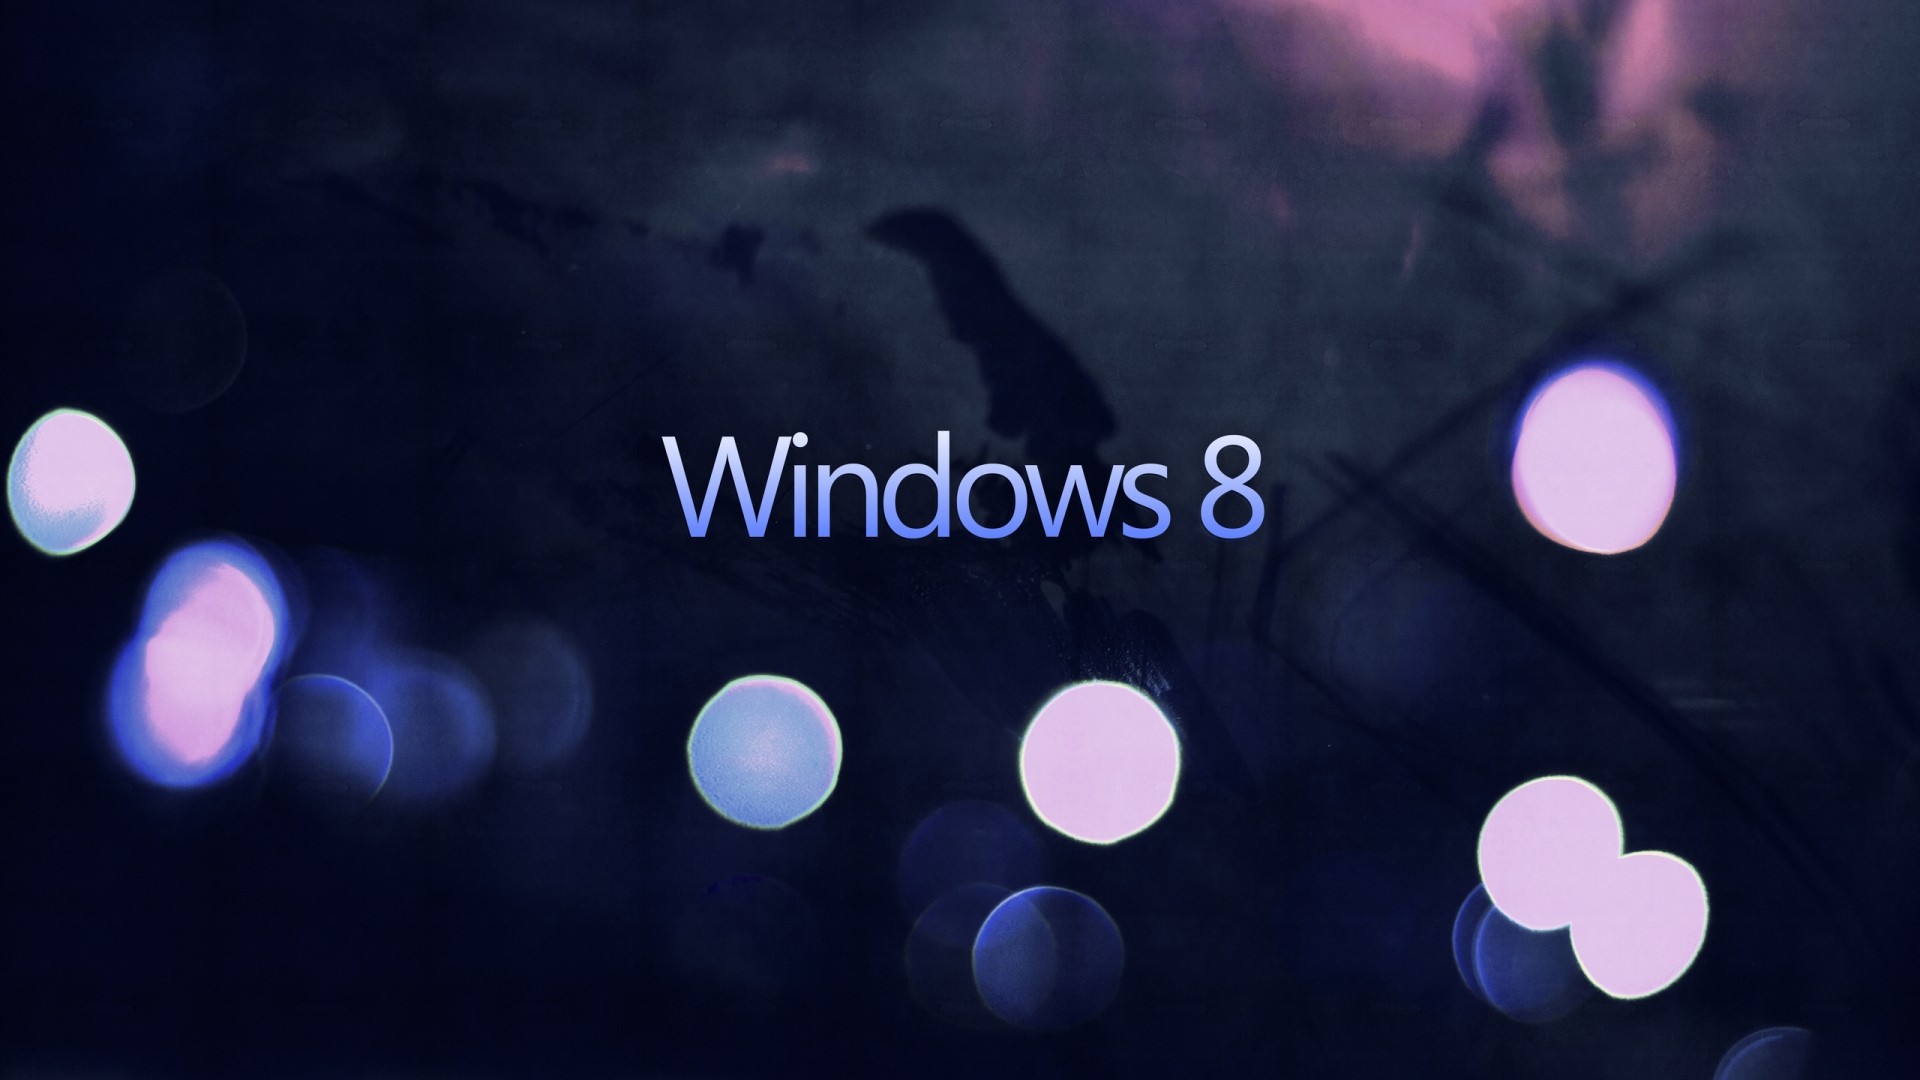 Best Windows 8 Background 2013 HD Wallpaper of Windows